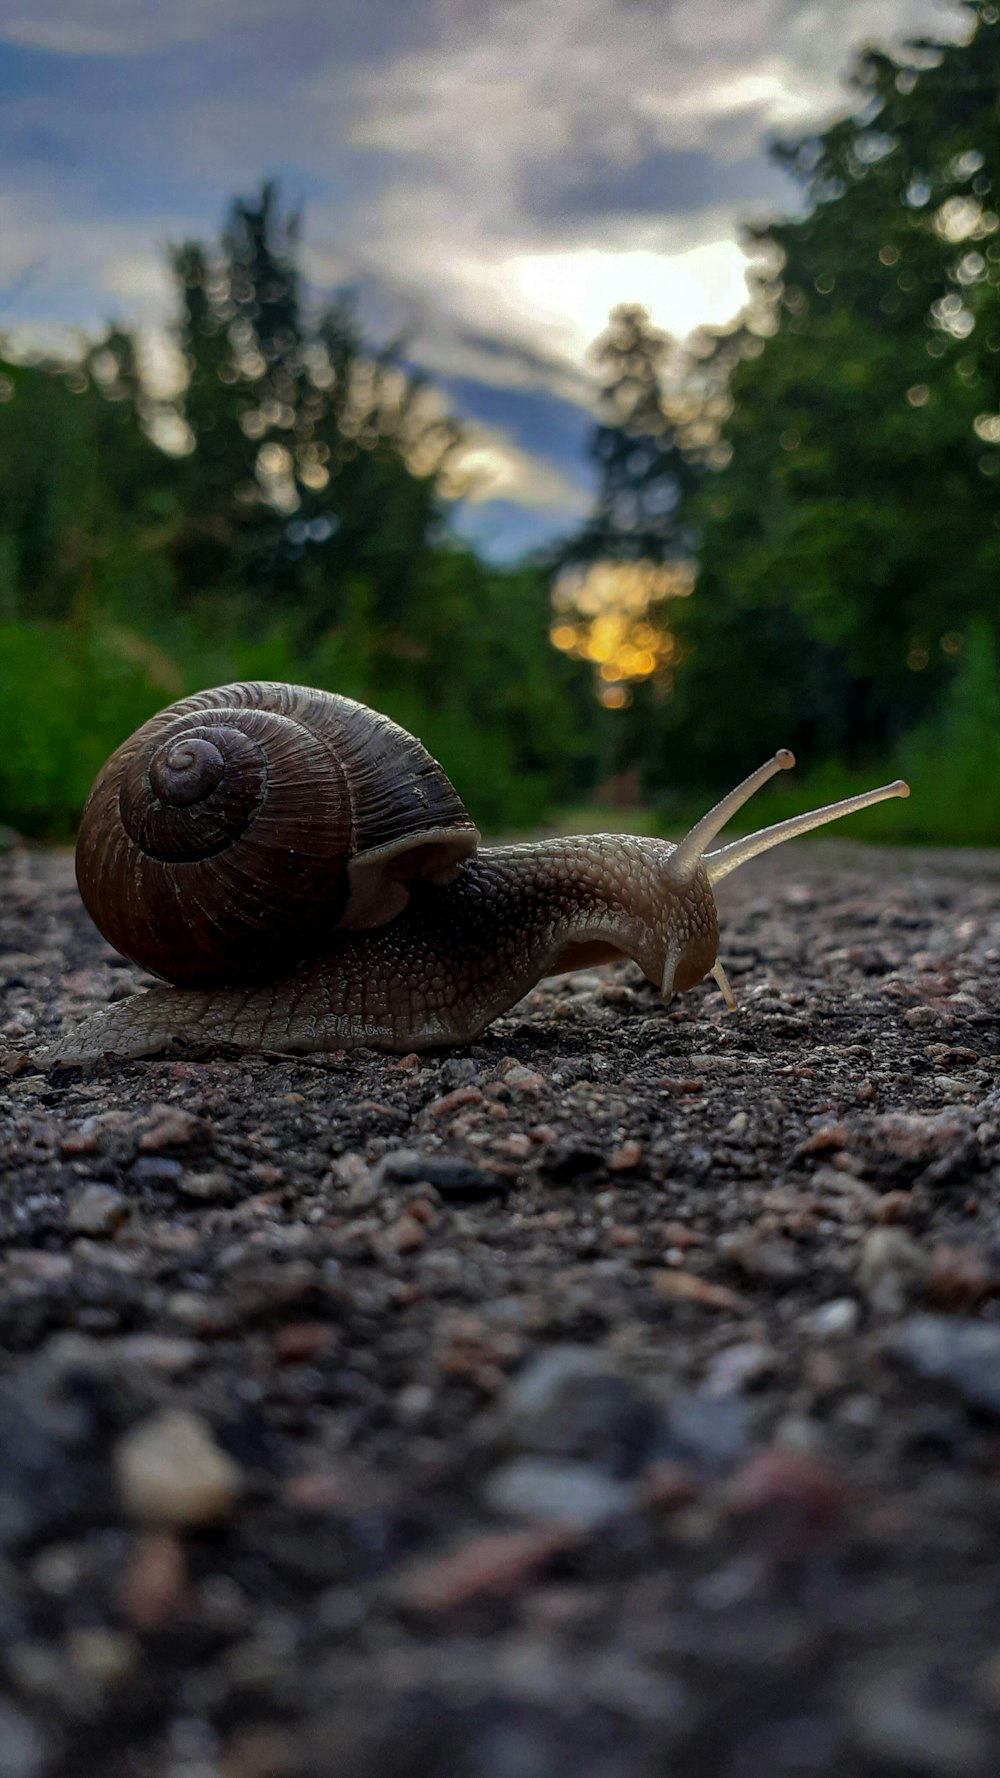 a snail crawling across a gravel road